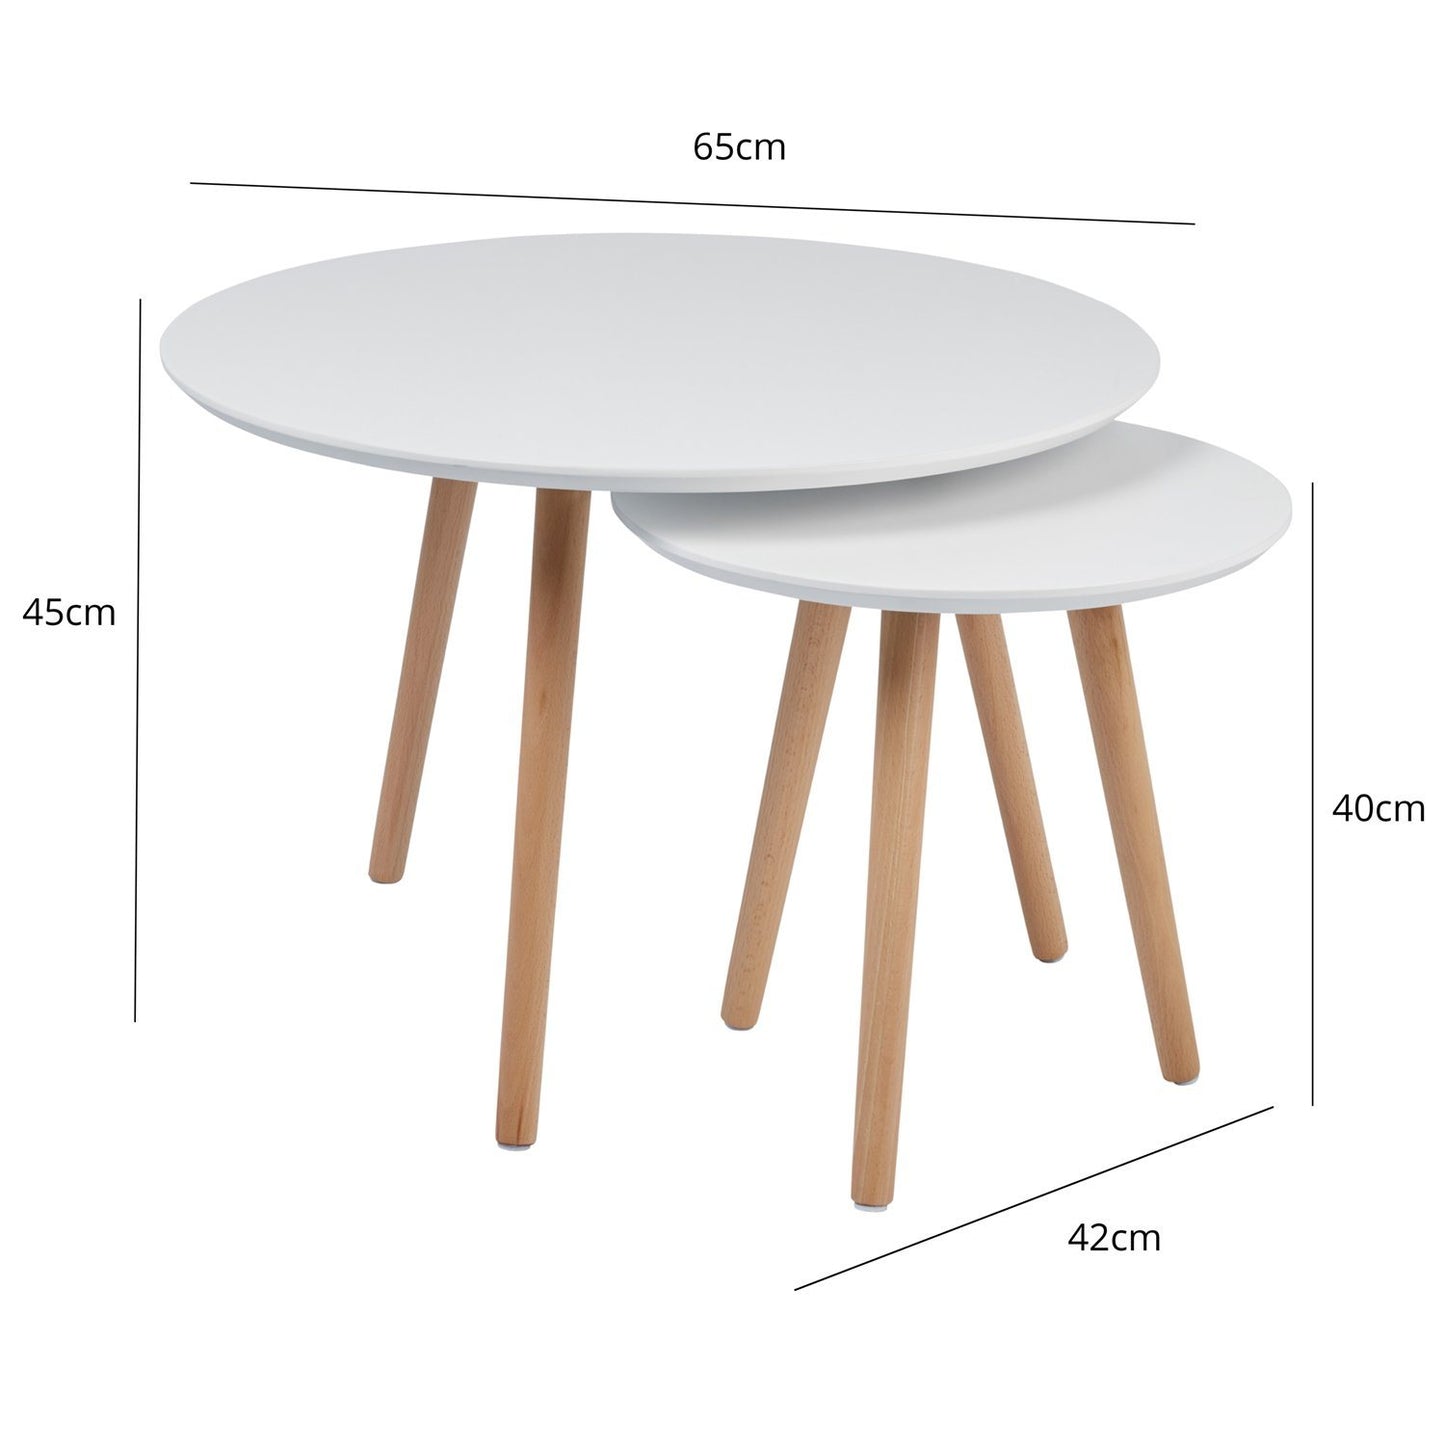 Hulra nest of tables - Scandinavian - white